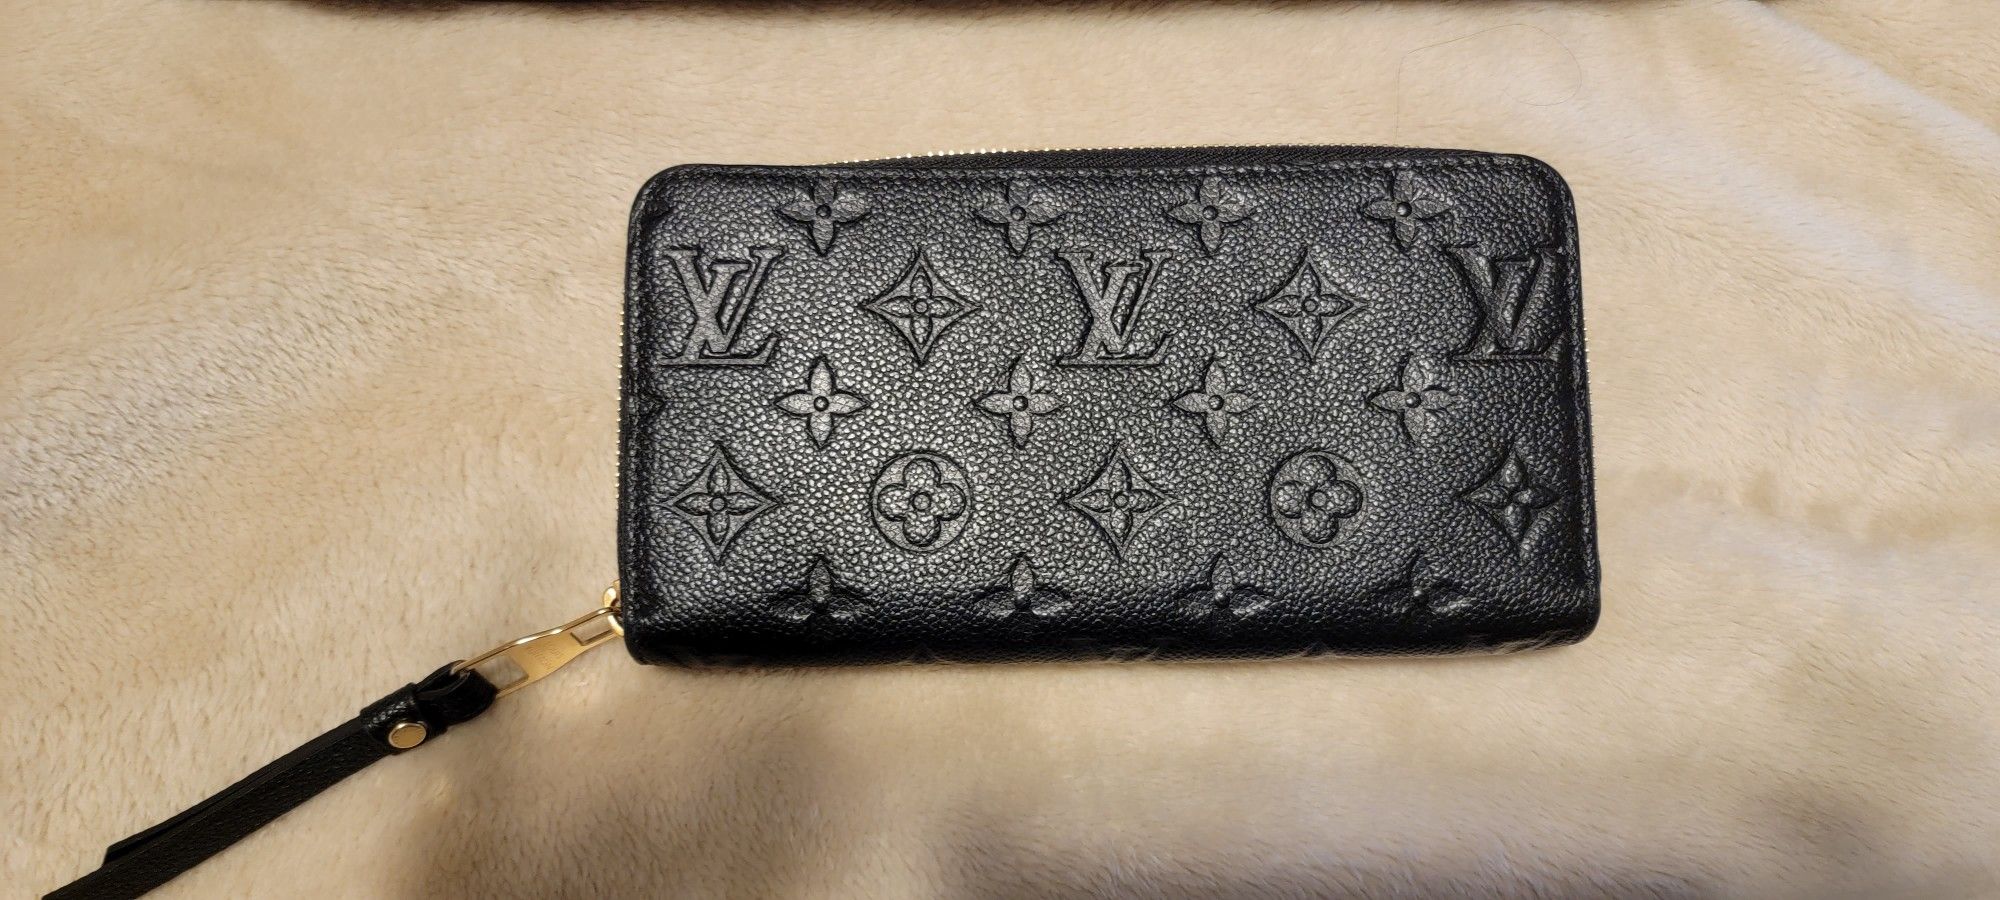 Louis Vuitton Artsy mm Handbag for Sale in Midlothian, TX - OfferUp